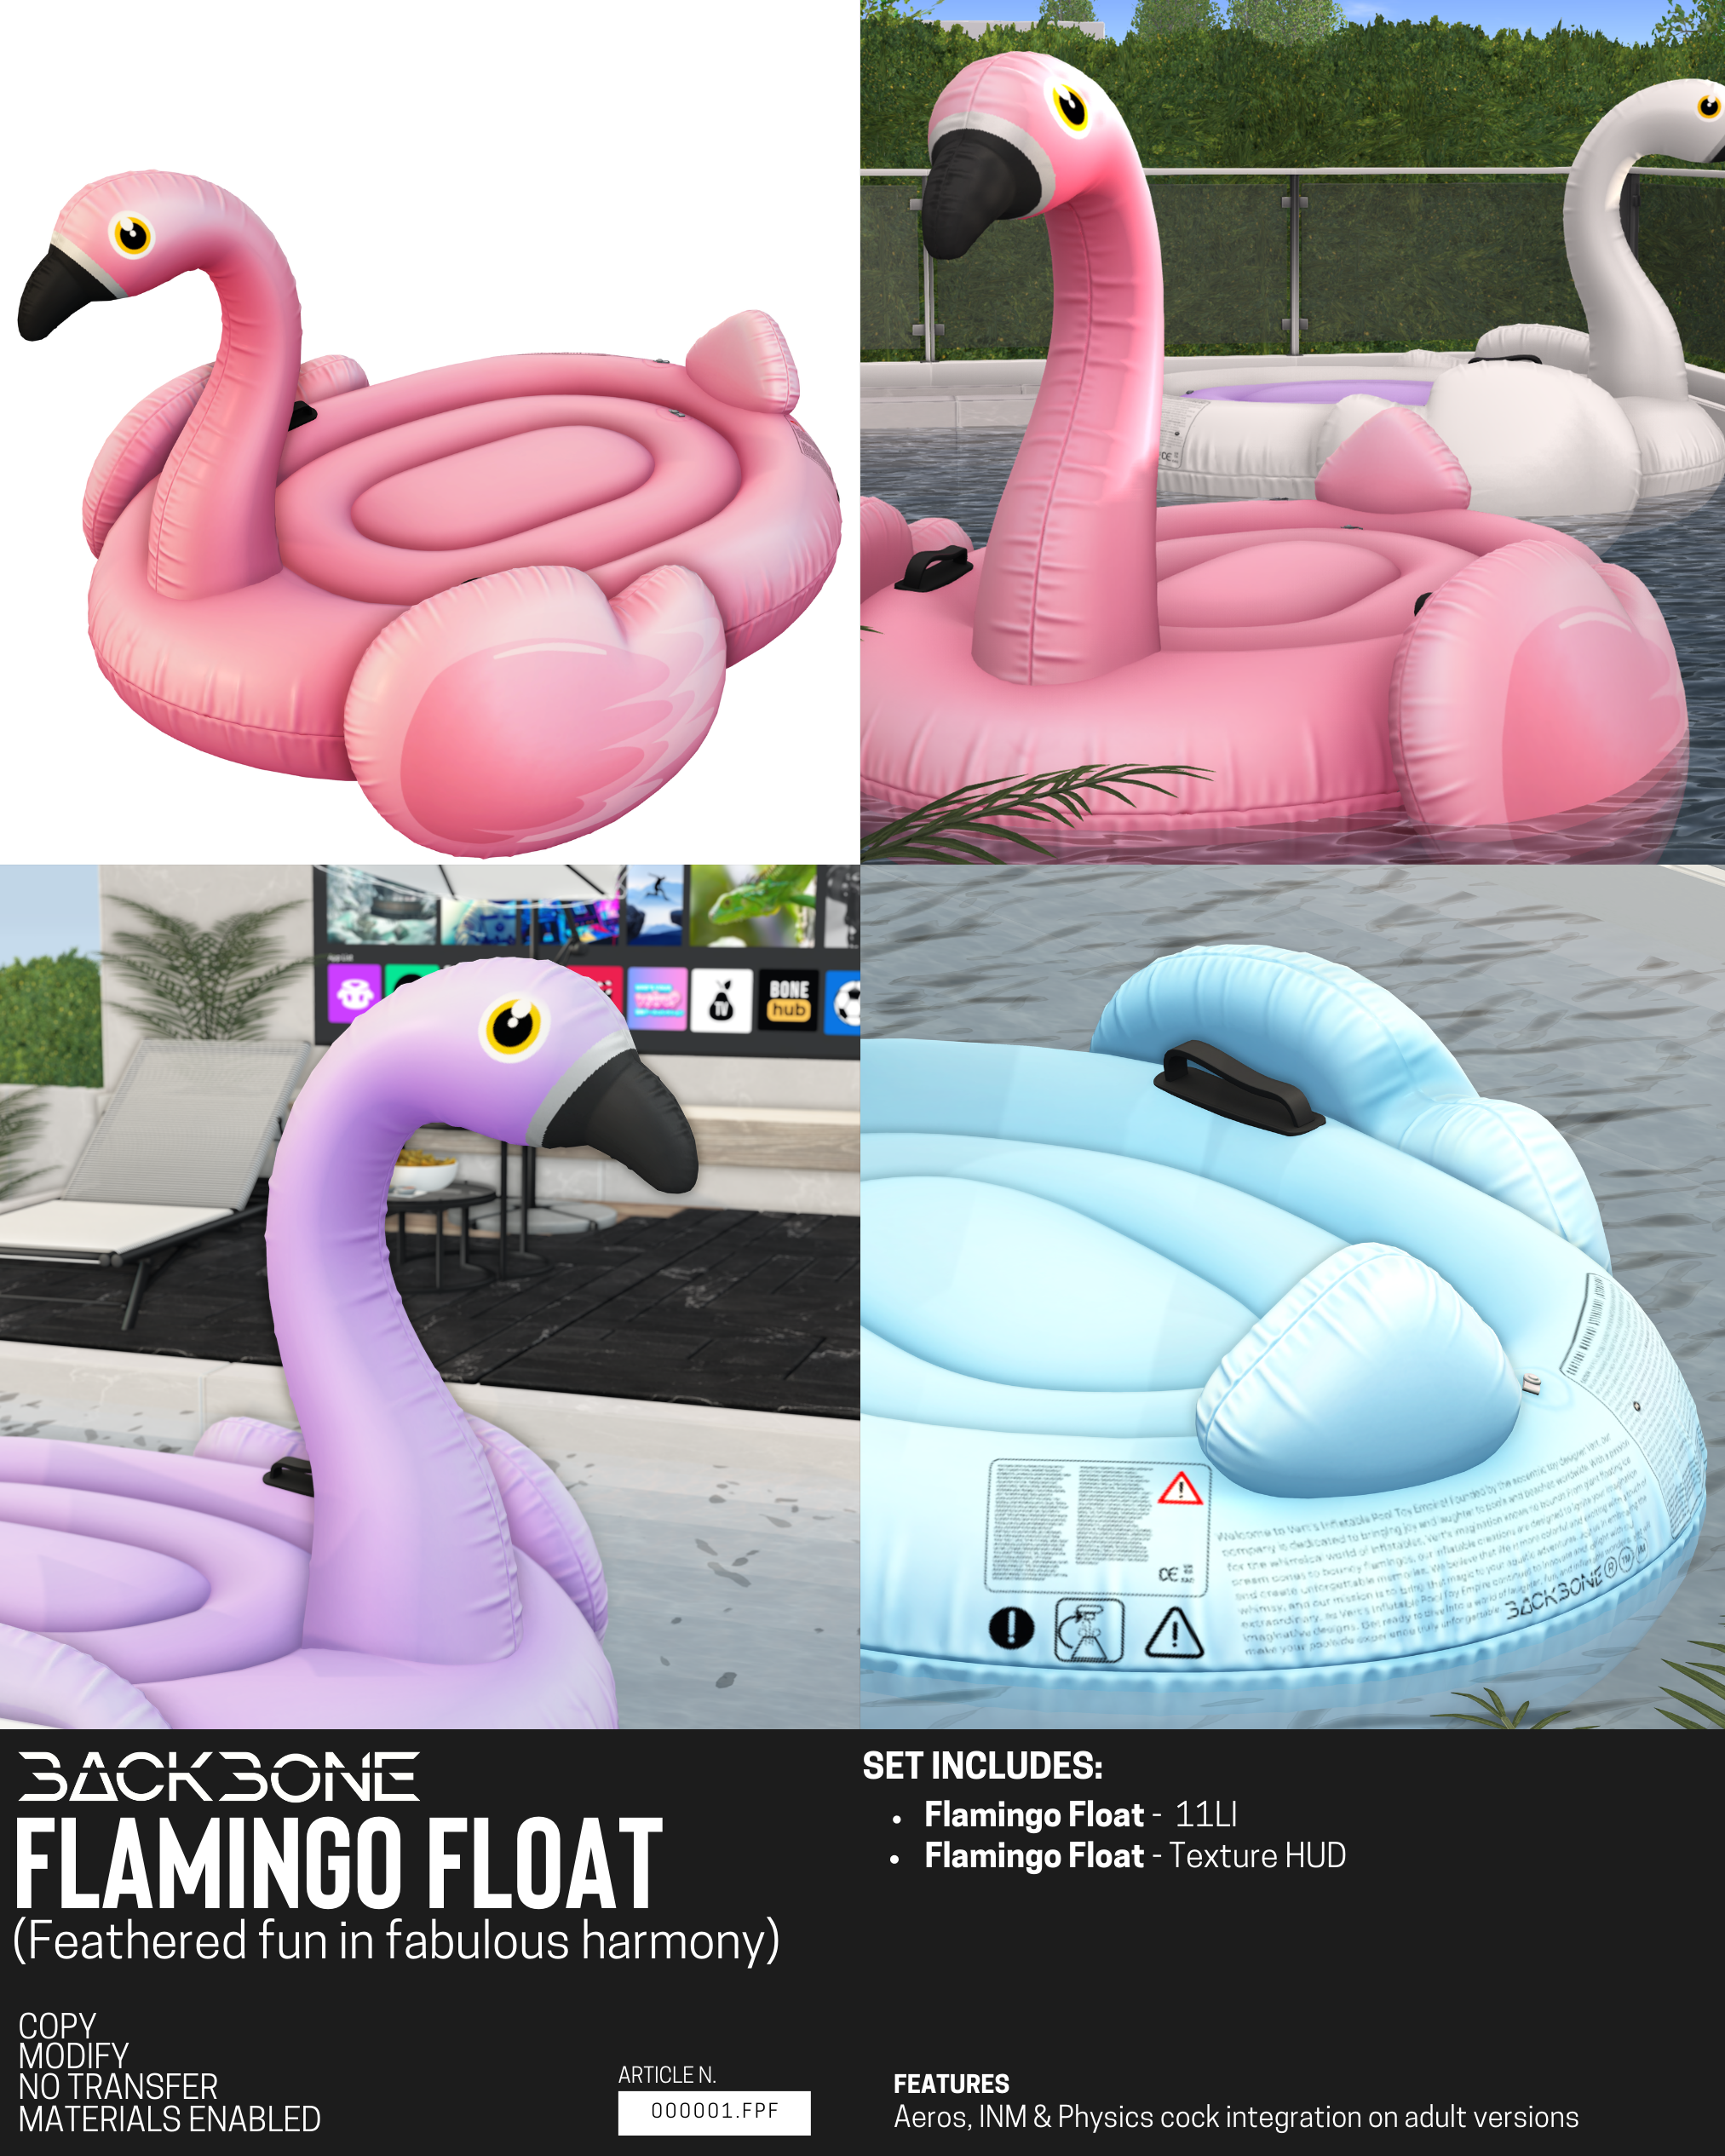 BackBone – Flamingo Float